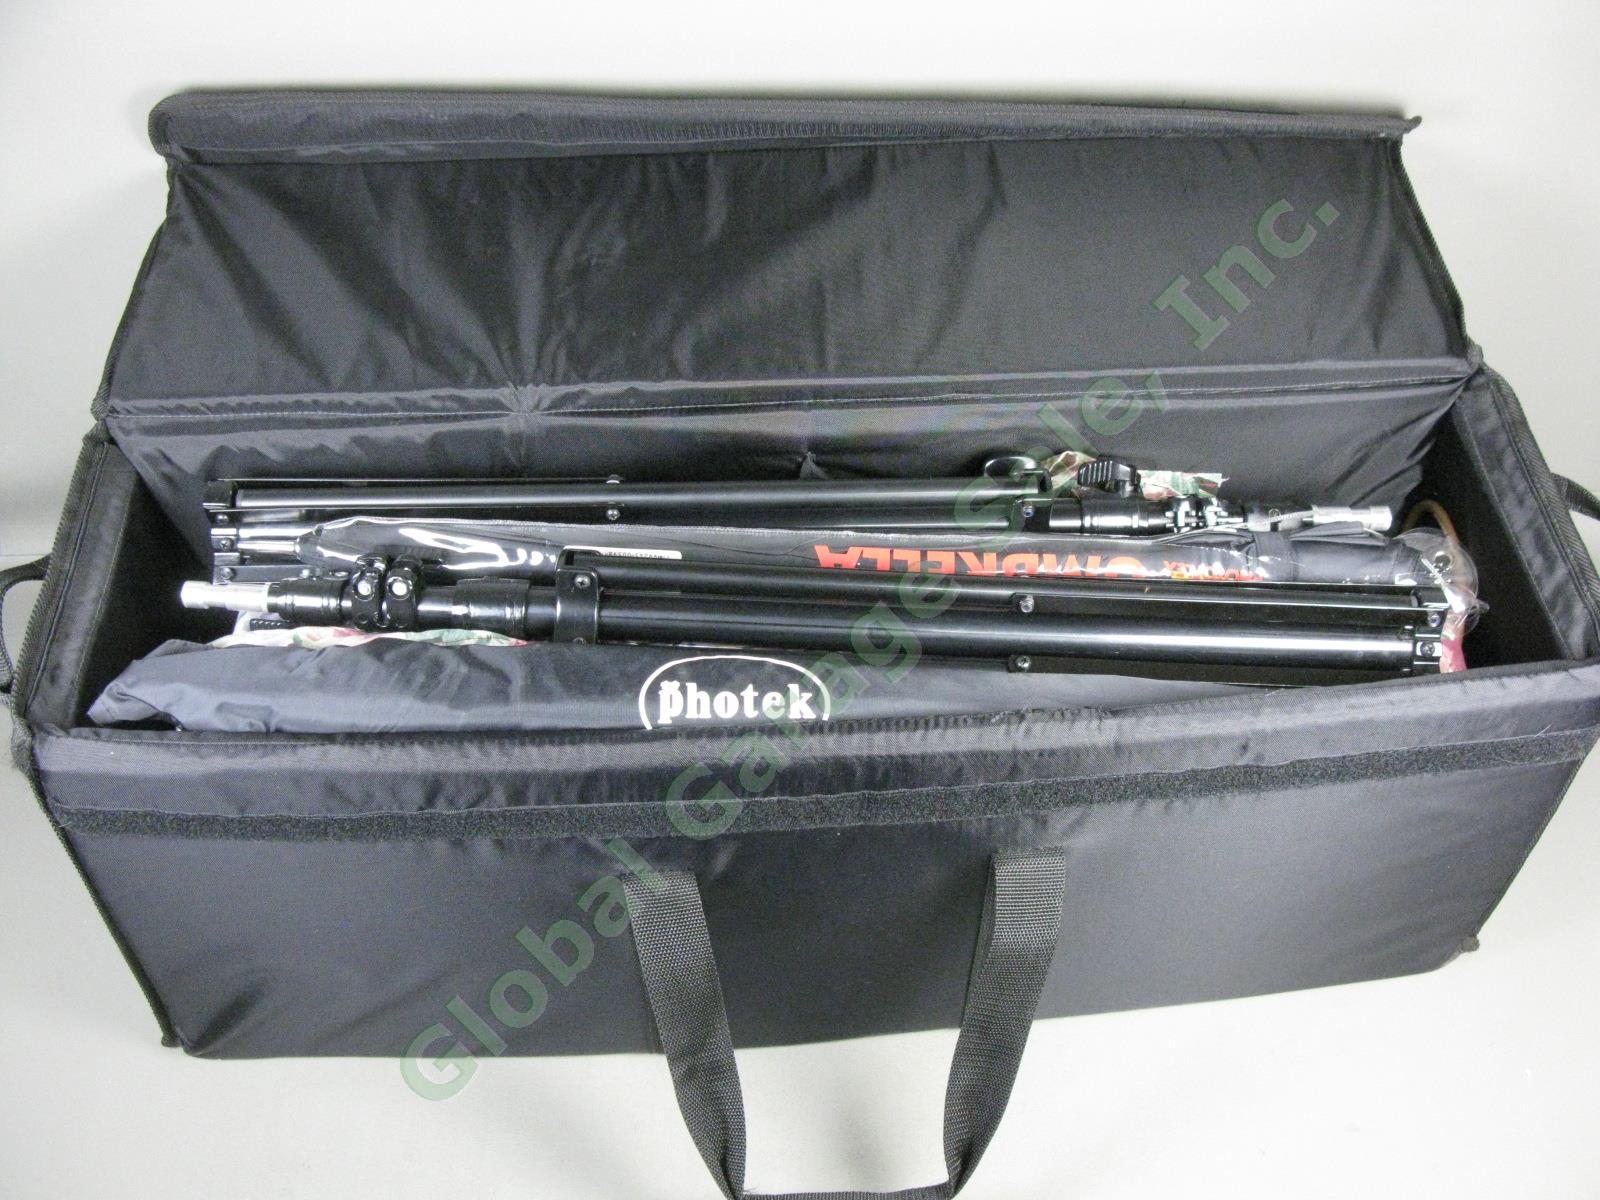 Speedotron DM802B Pro Camera Photo Studio Flash Kit 3 Heads Umbrellas Snoot EXC! 3